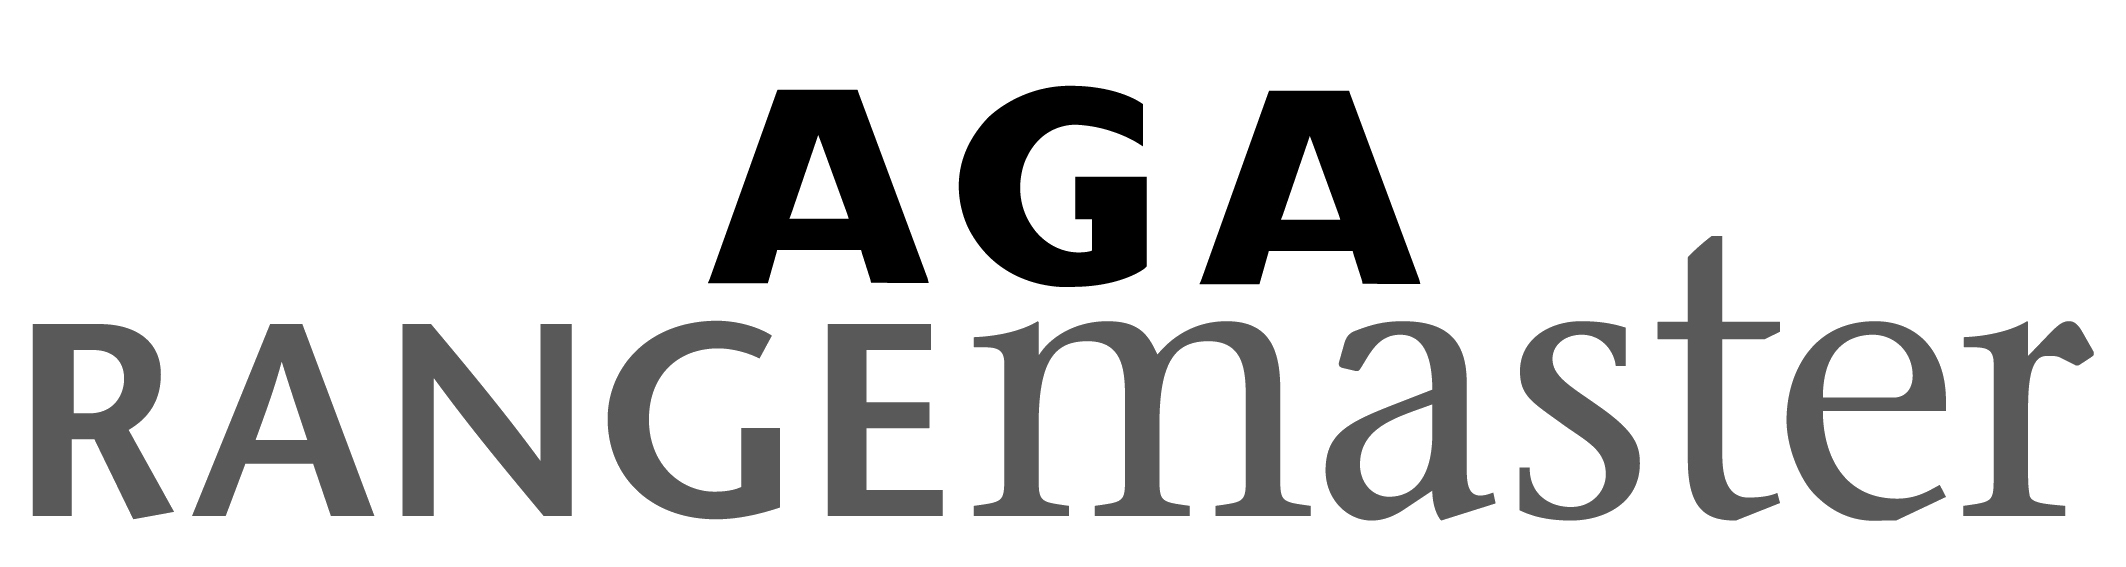 Aga Rangemaster Group